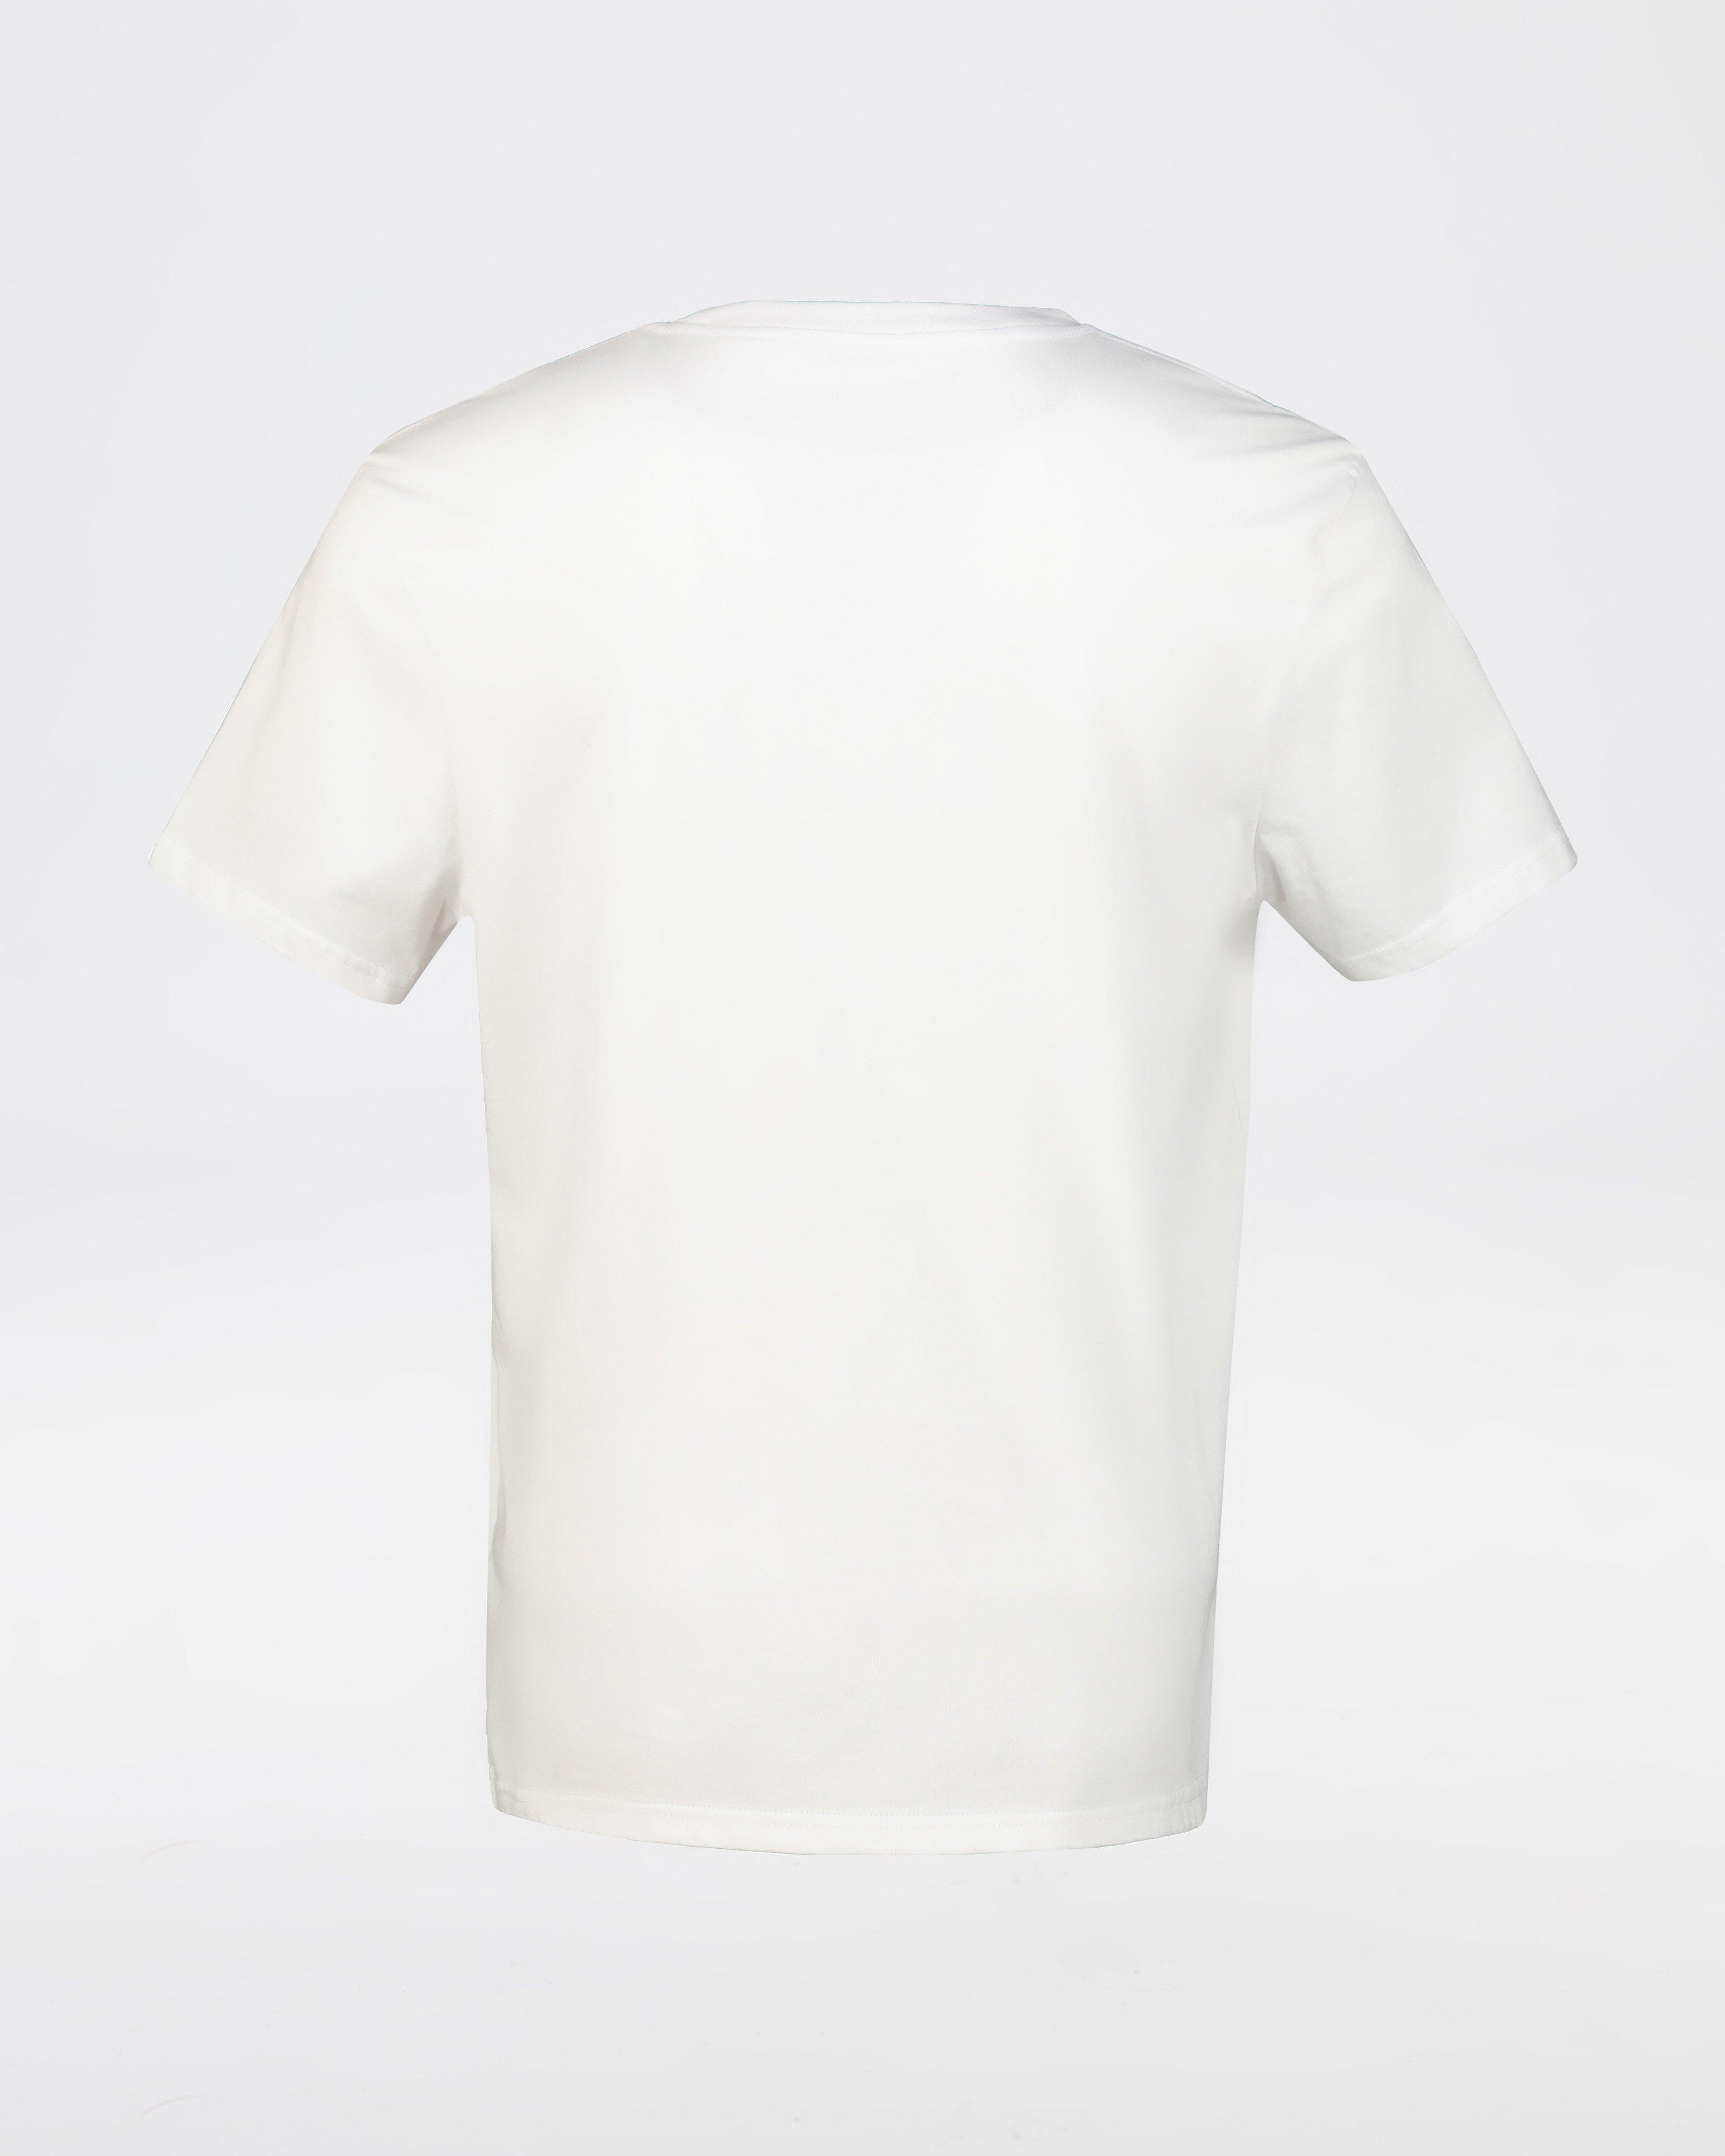 K-Way Elements Men’s Short Sleeve T-shirt -  White